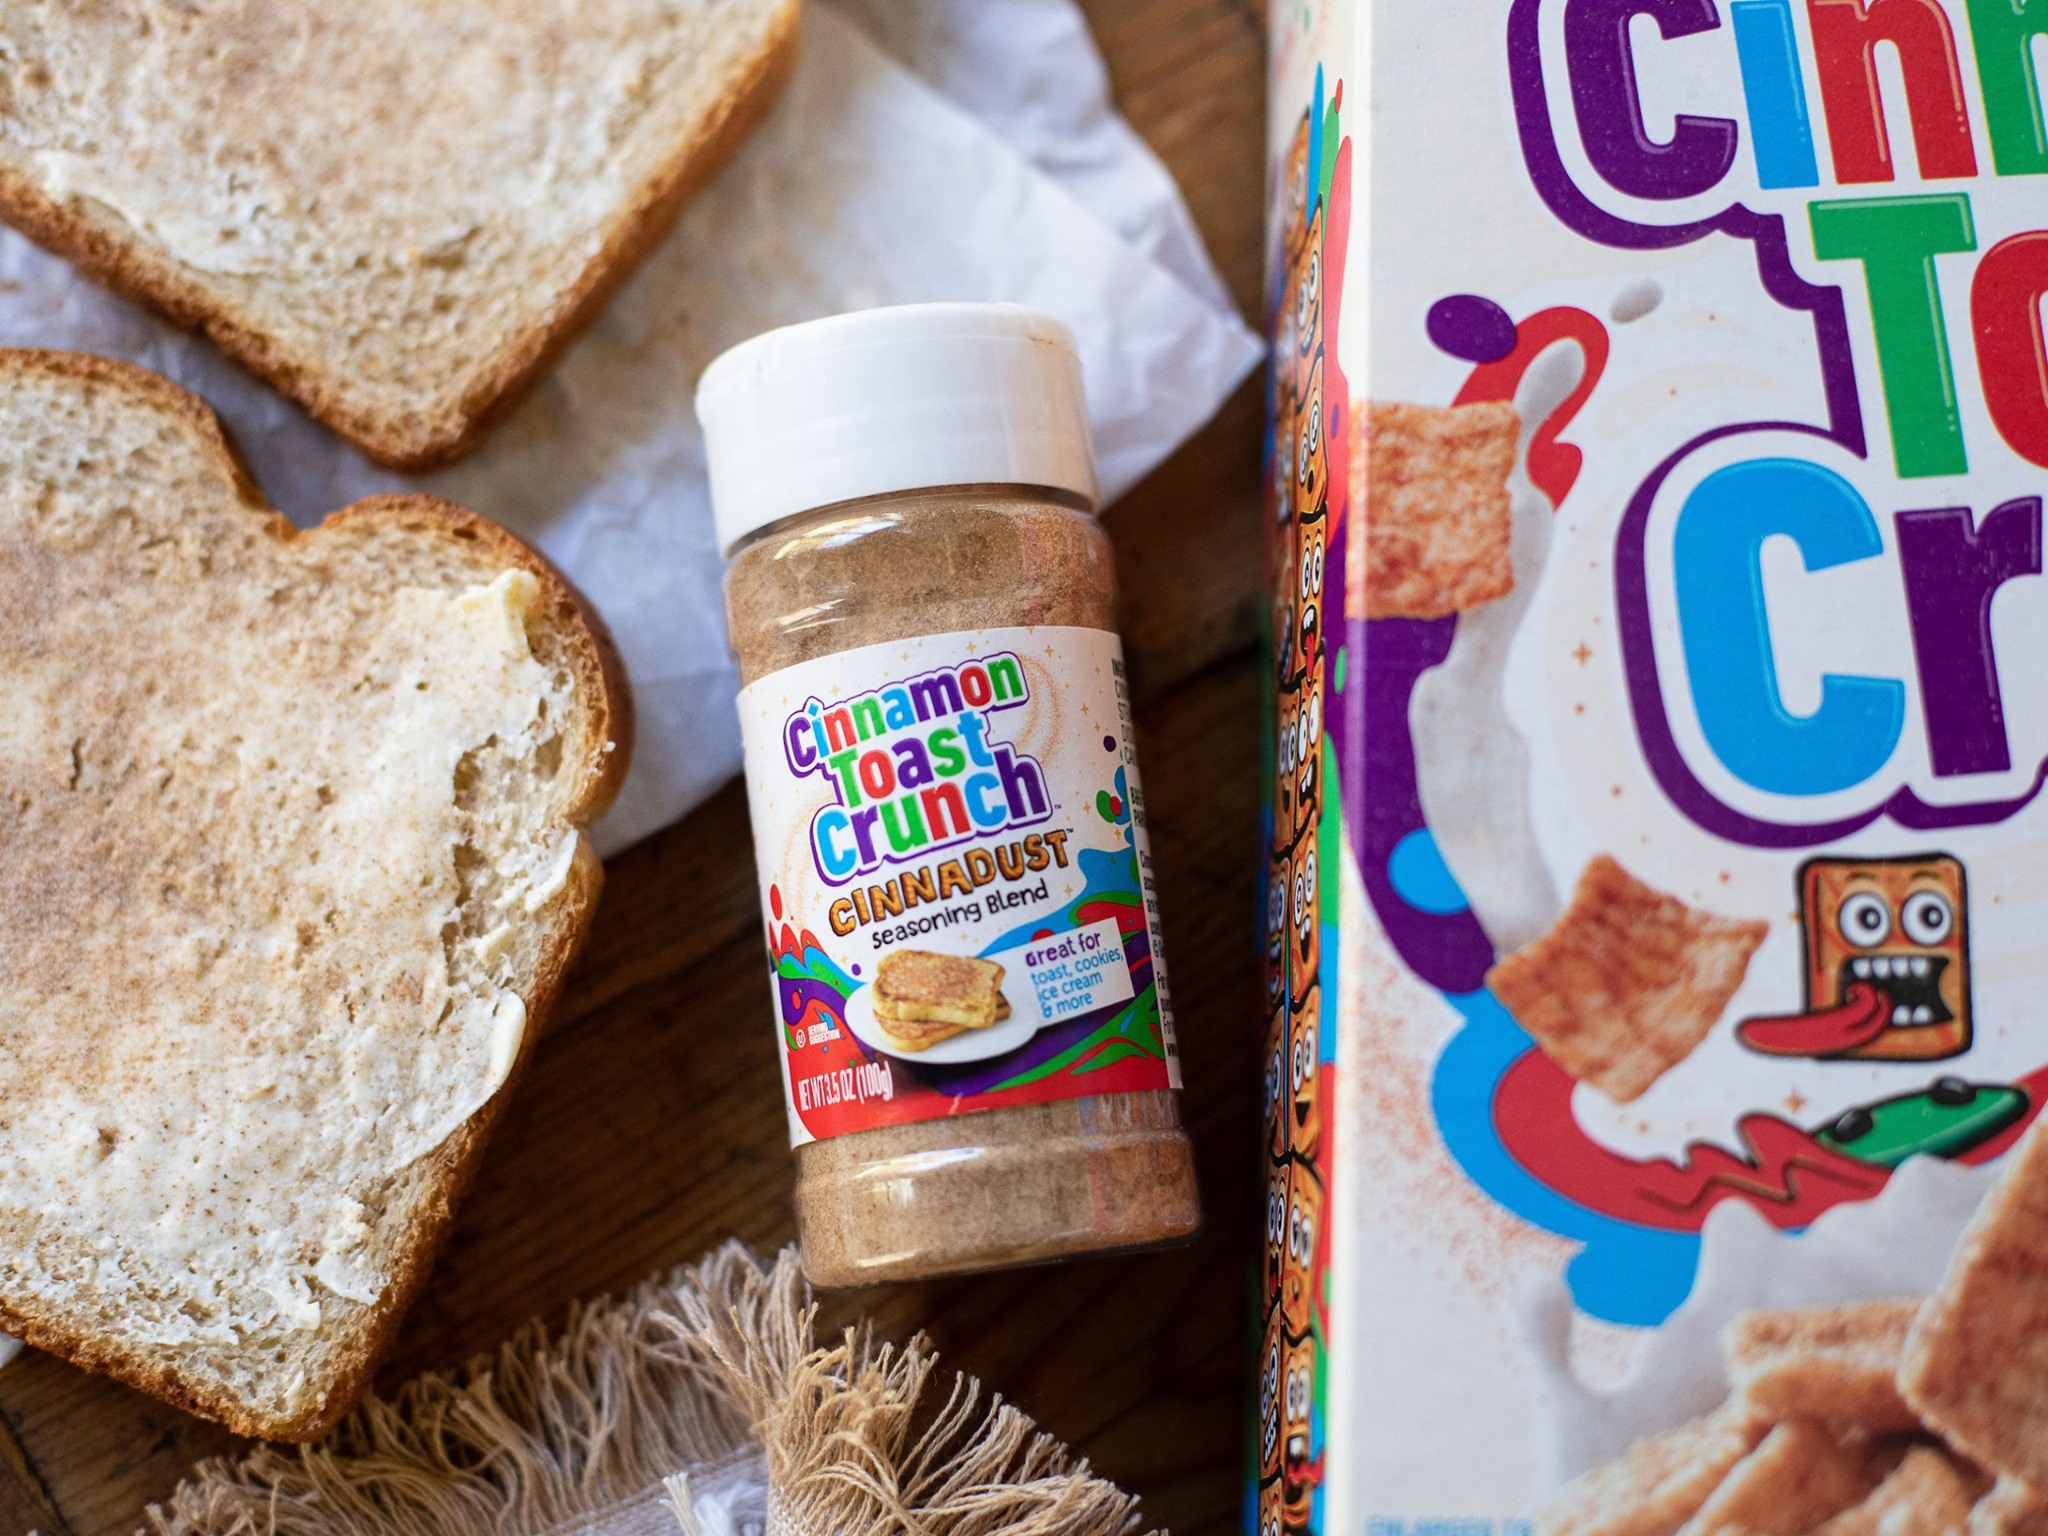 Cinnamon Toast Crunch Cinnadust Is Half Price At Publix - iHeartPublix